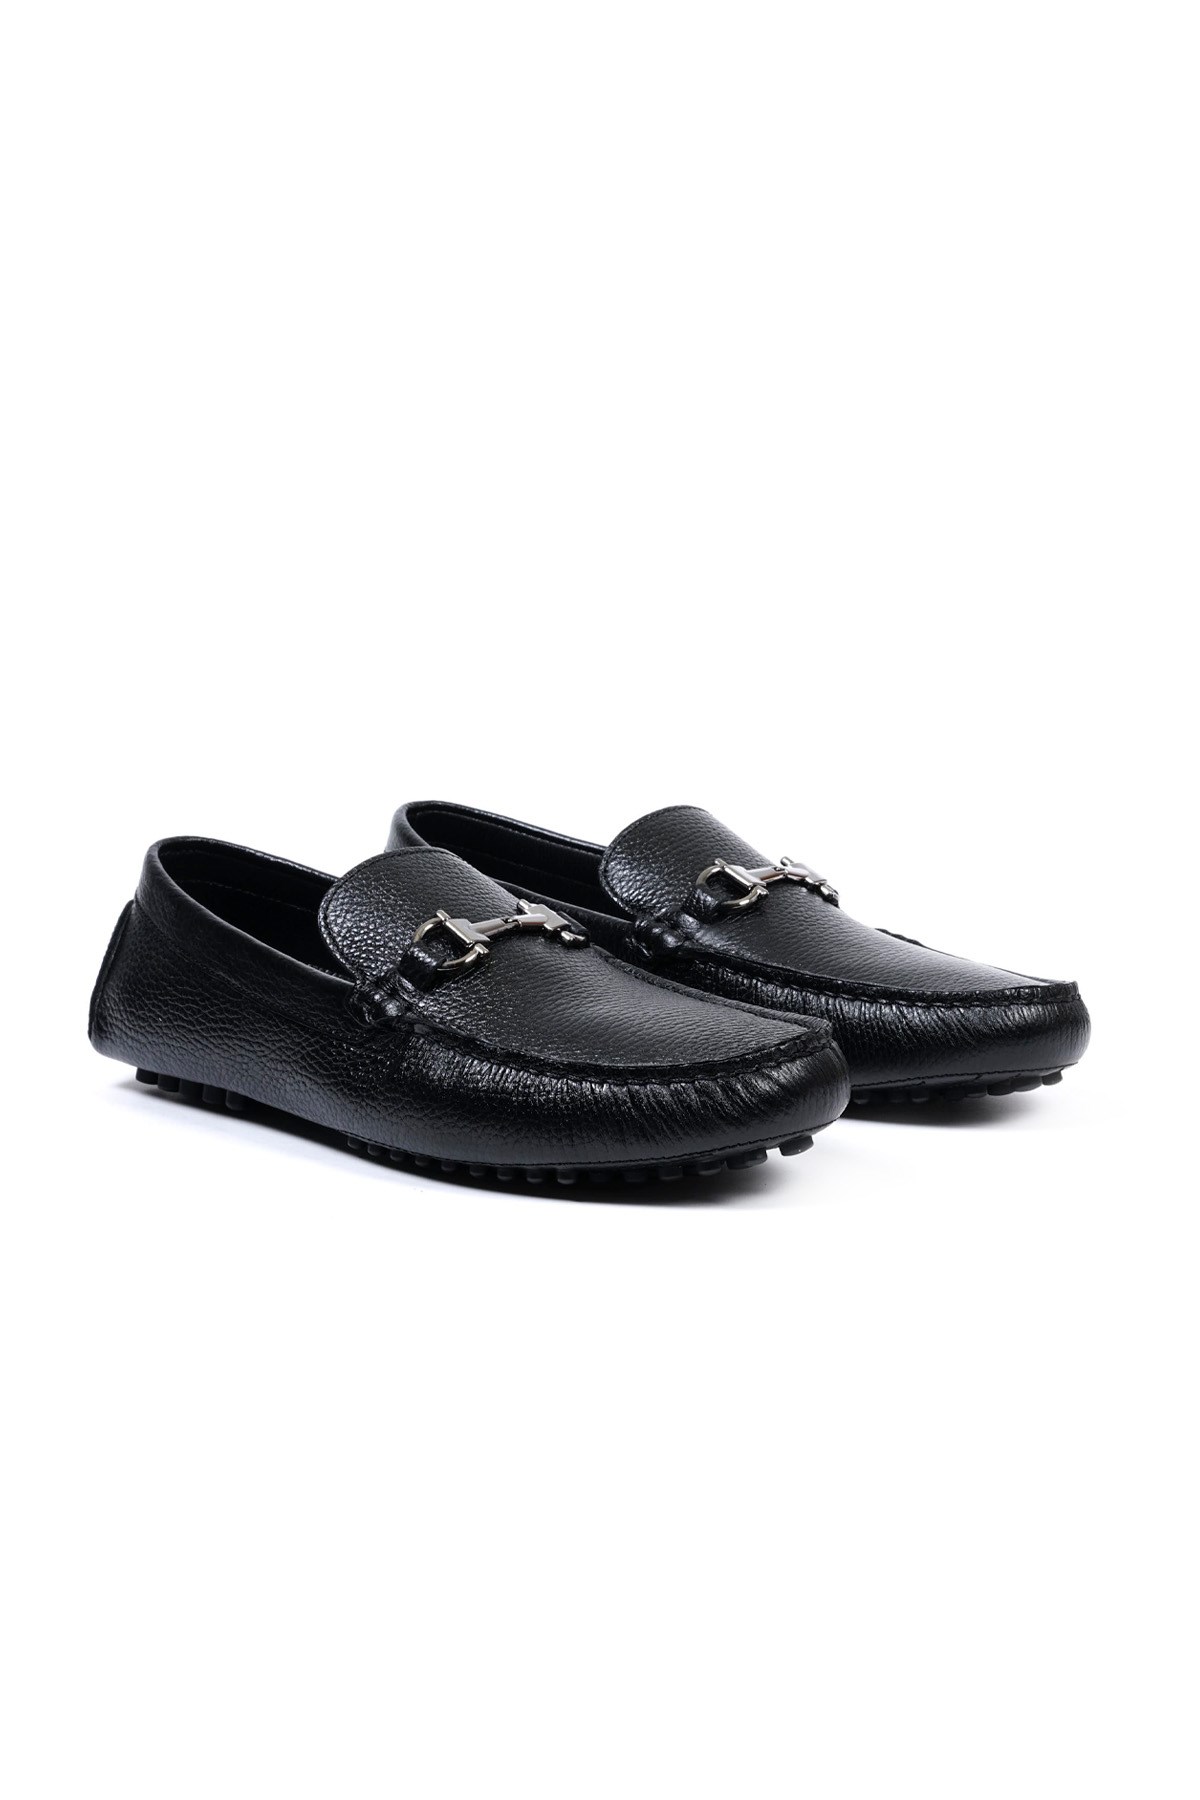 Sumela Genuine Leather Black Crampon Sole Lace-Up Buckled Loafer Men's Shoes